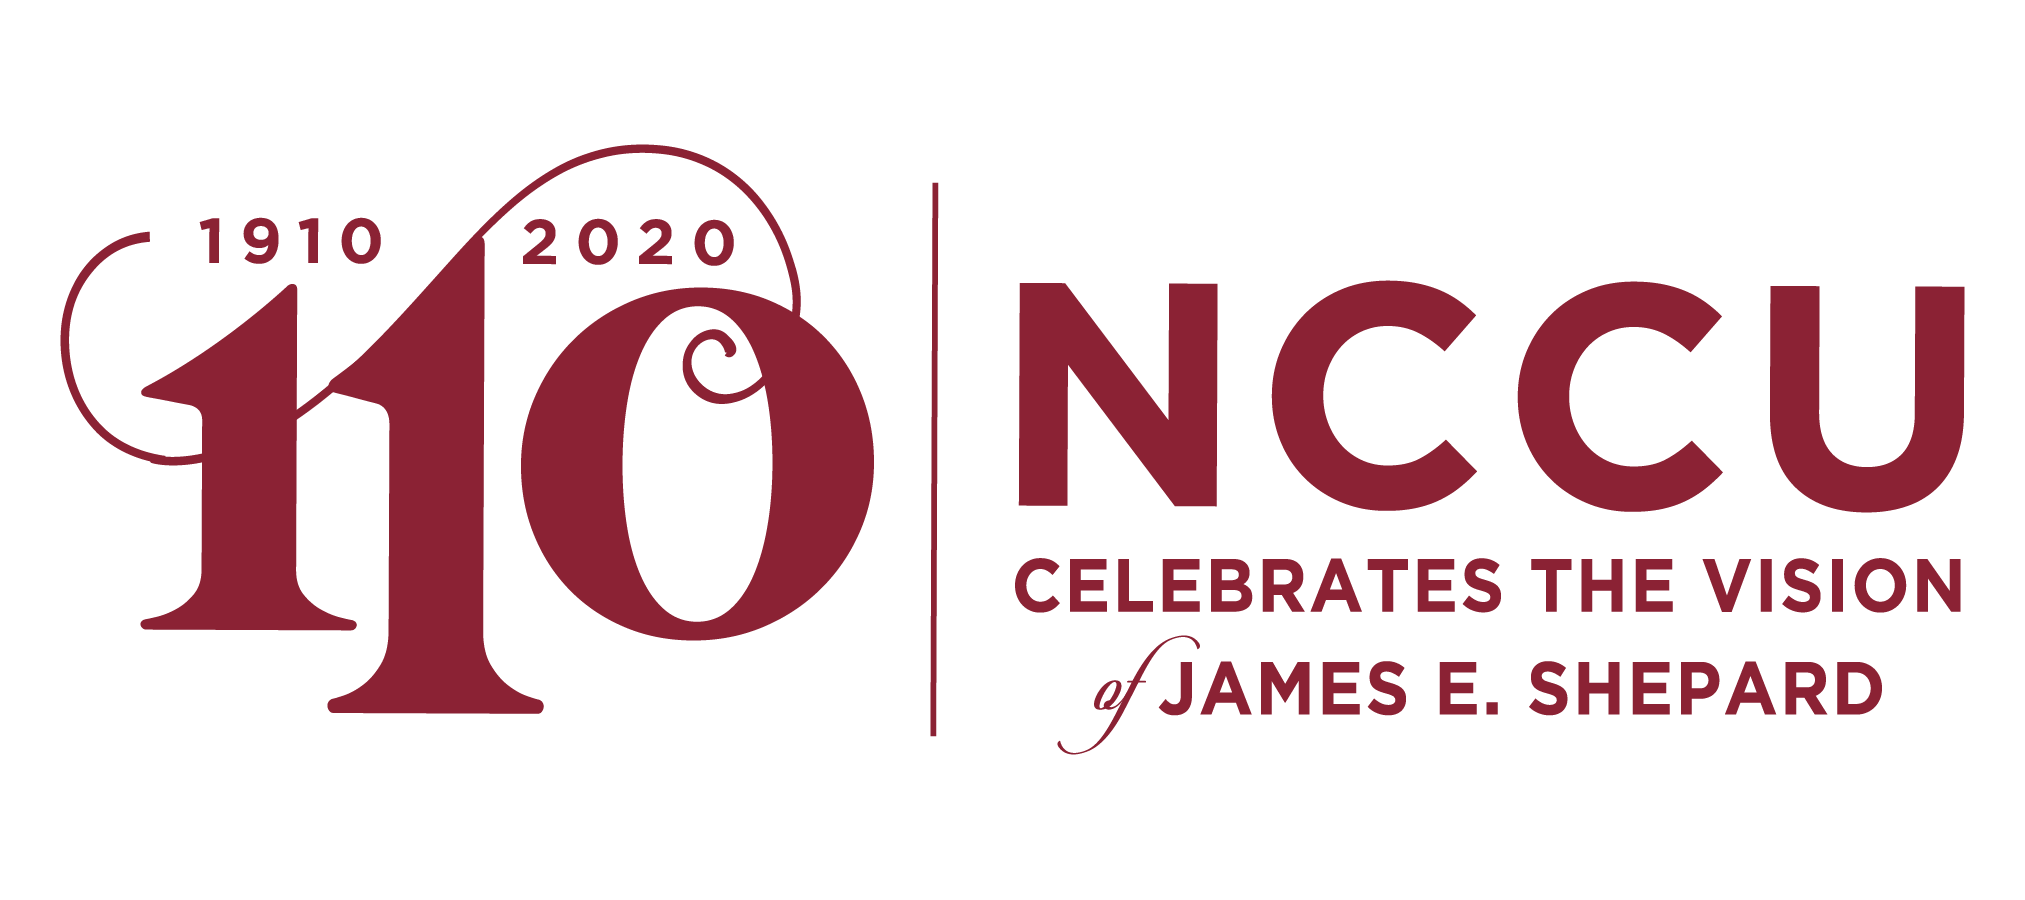 NCCU 110 Anniversary Logo